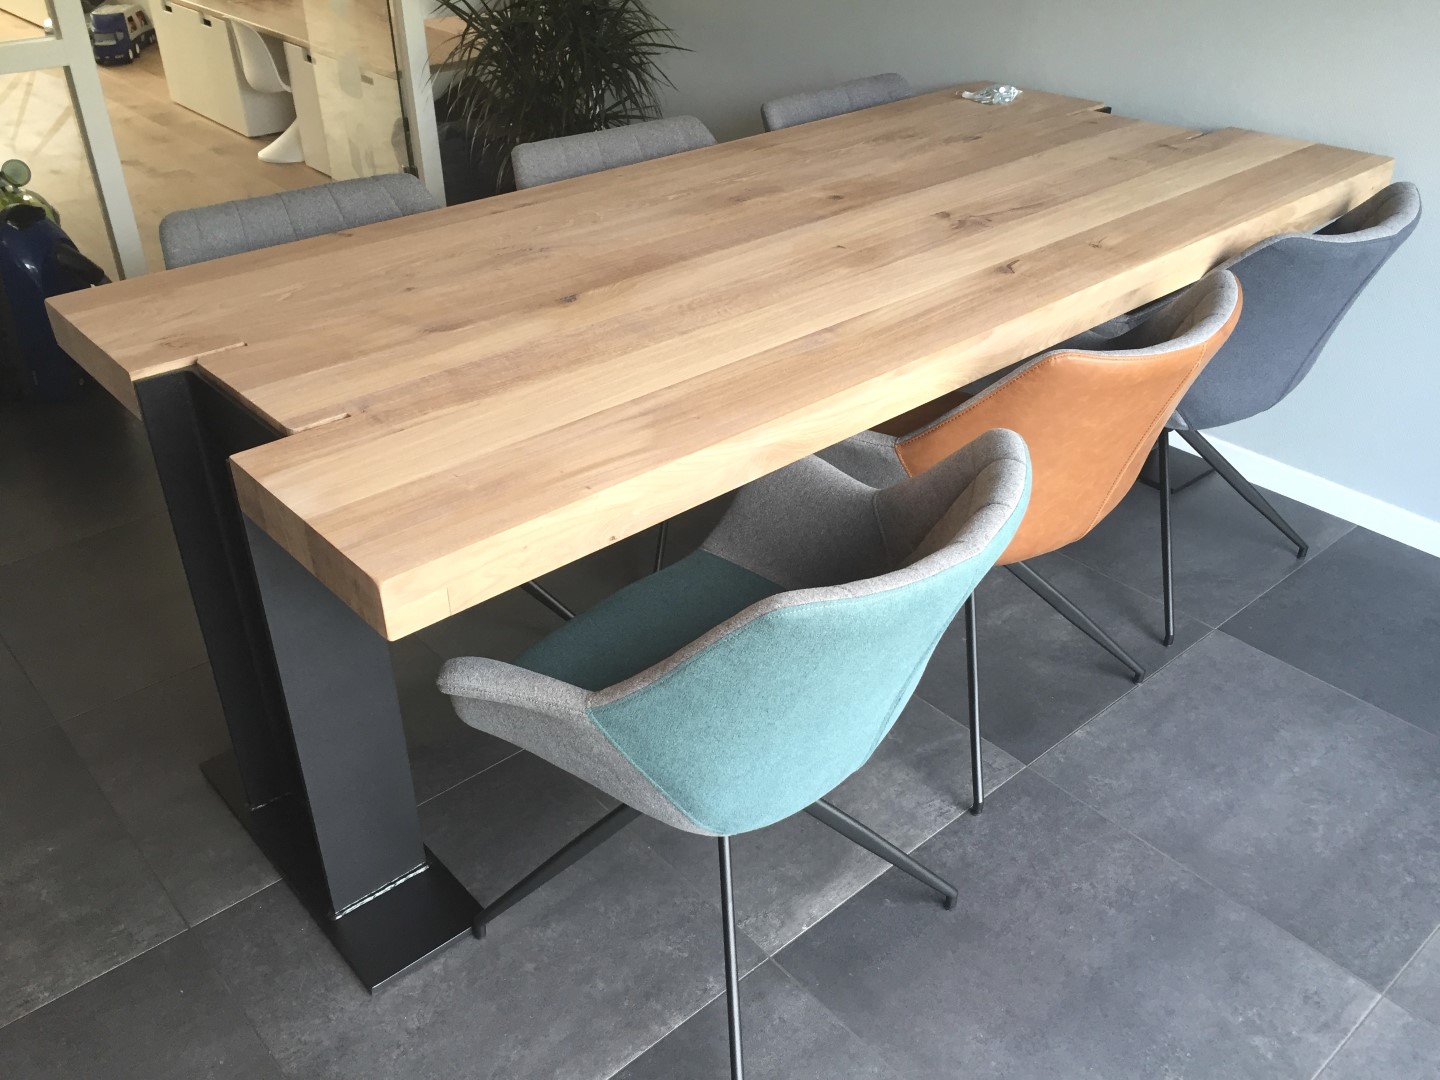 Betere Stoere tafels | Woonloodz levert diverse stoere tafels! WB-98